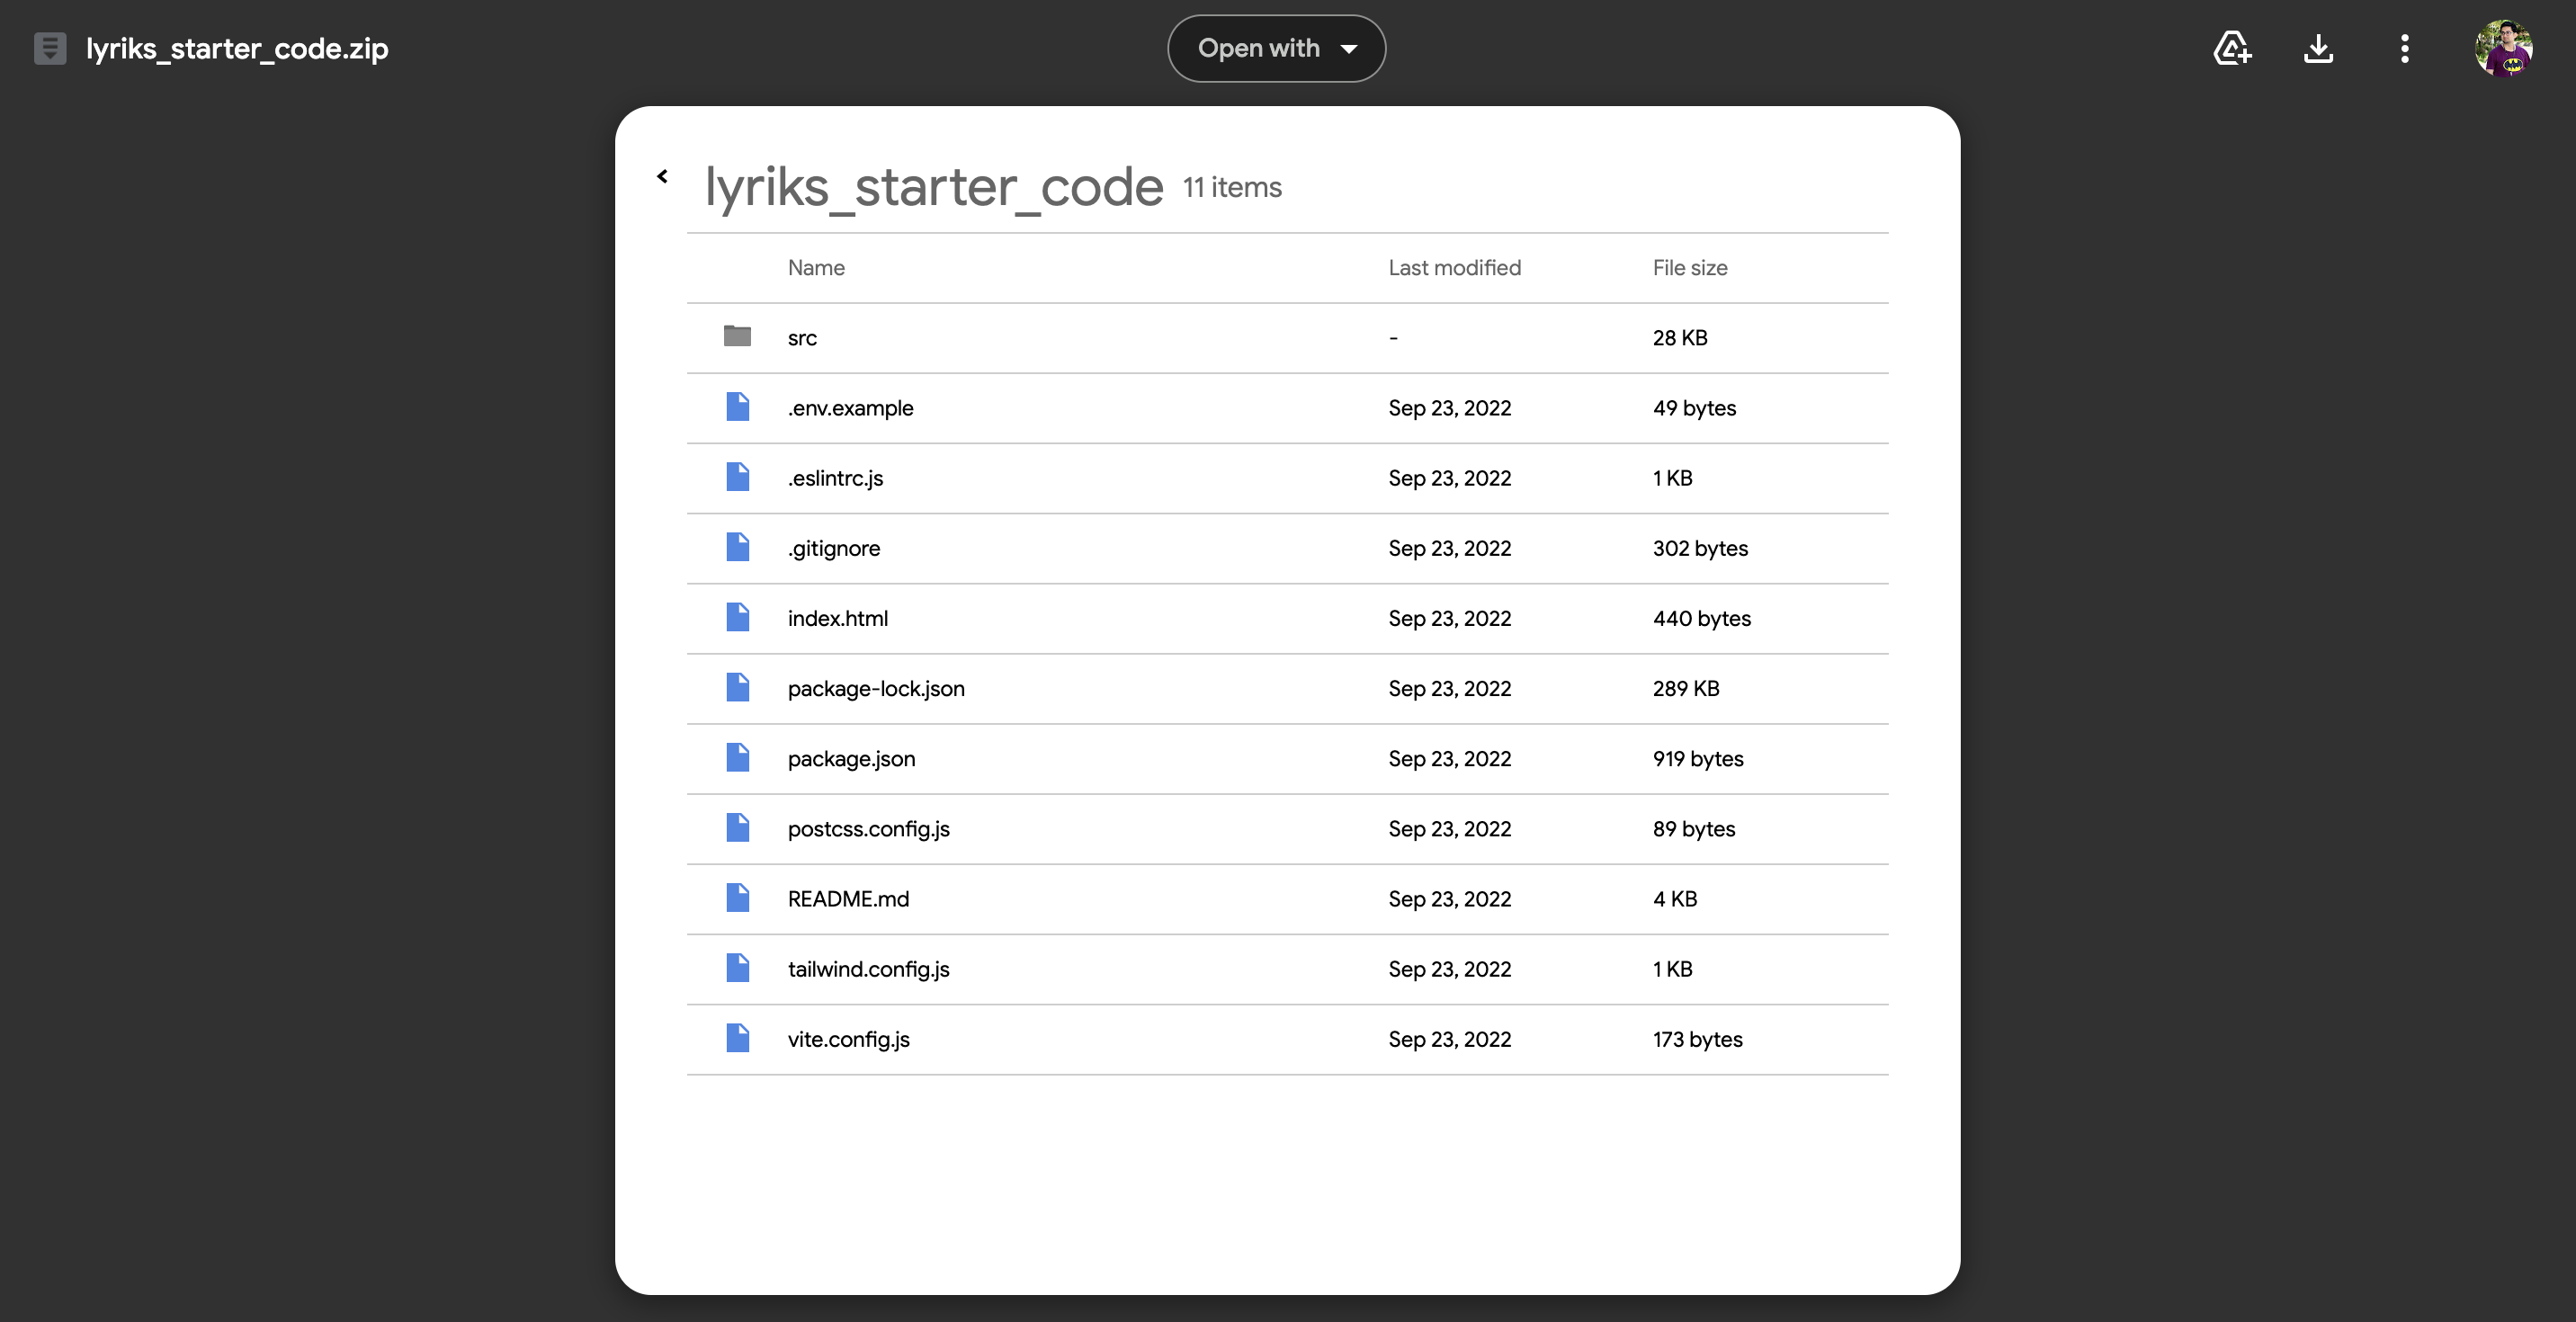 Lyriks Starter Code files in Google docs